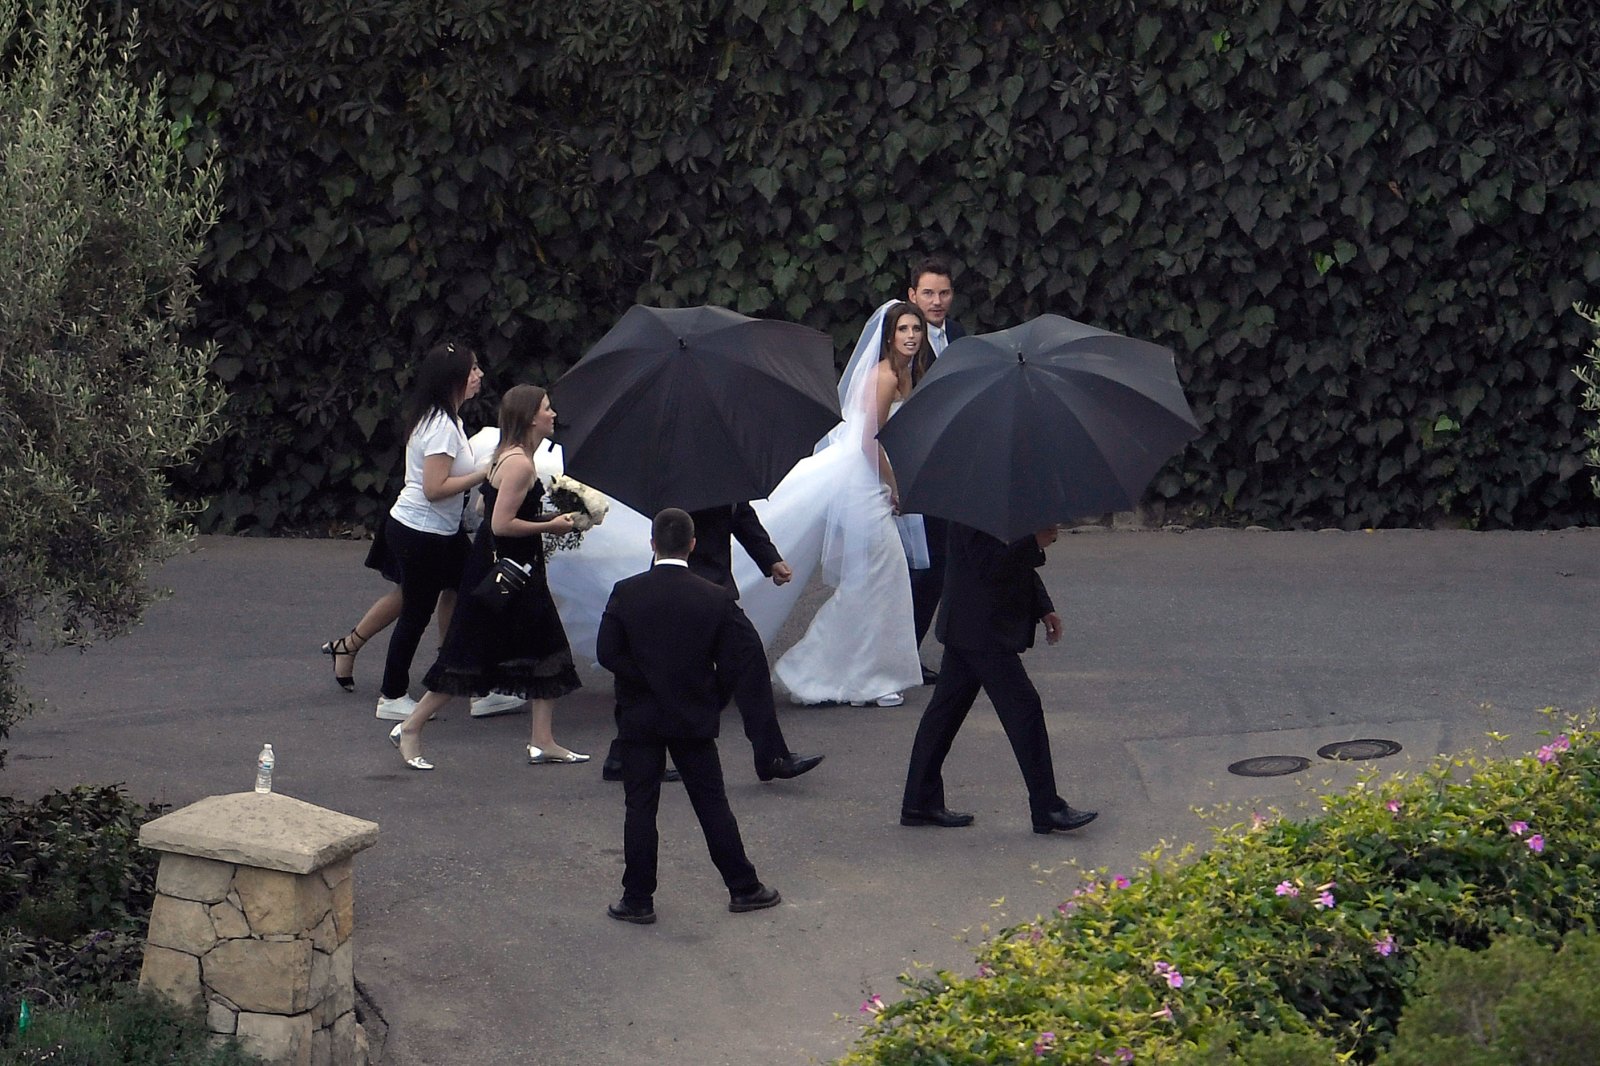 Chris Pratt Shows Off Wedding Ring After Secret Nuptials to Wife Katherine